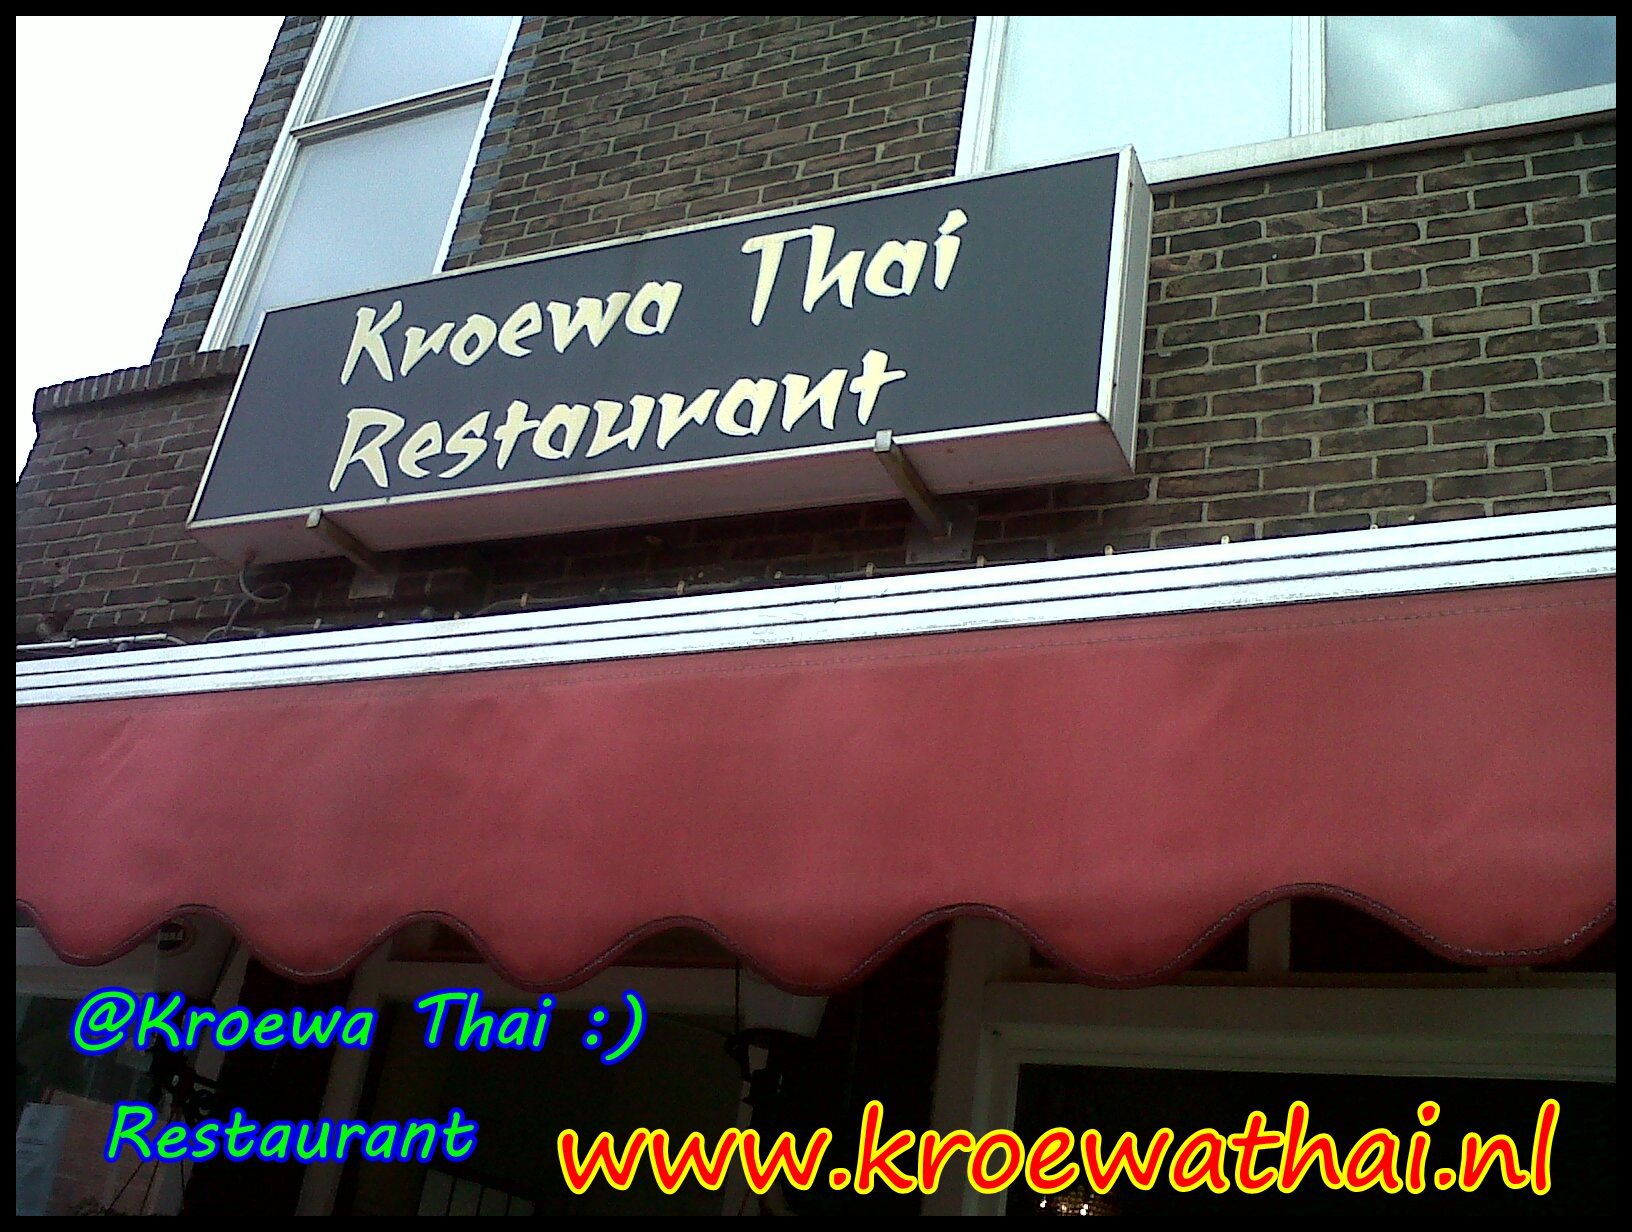 Thai restaurant Kroewa Thai photo via facebook